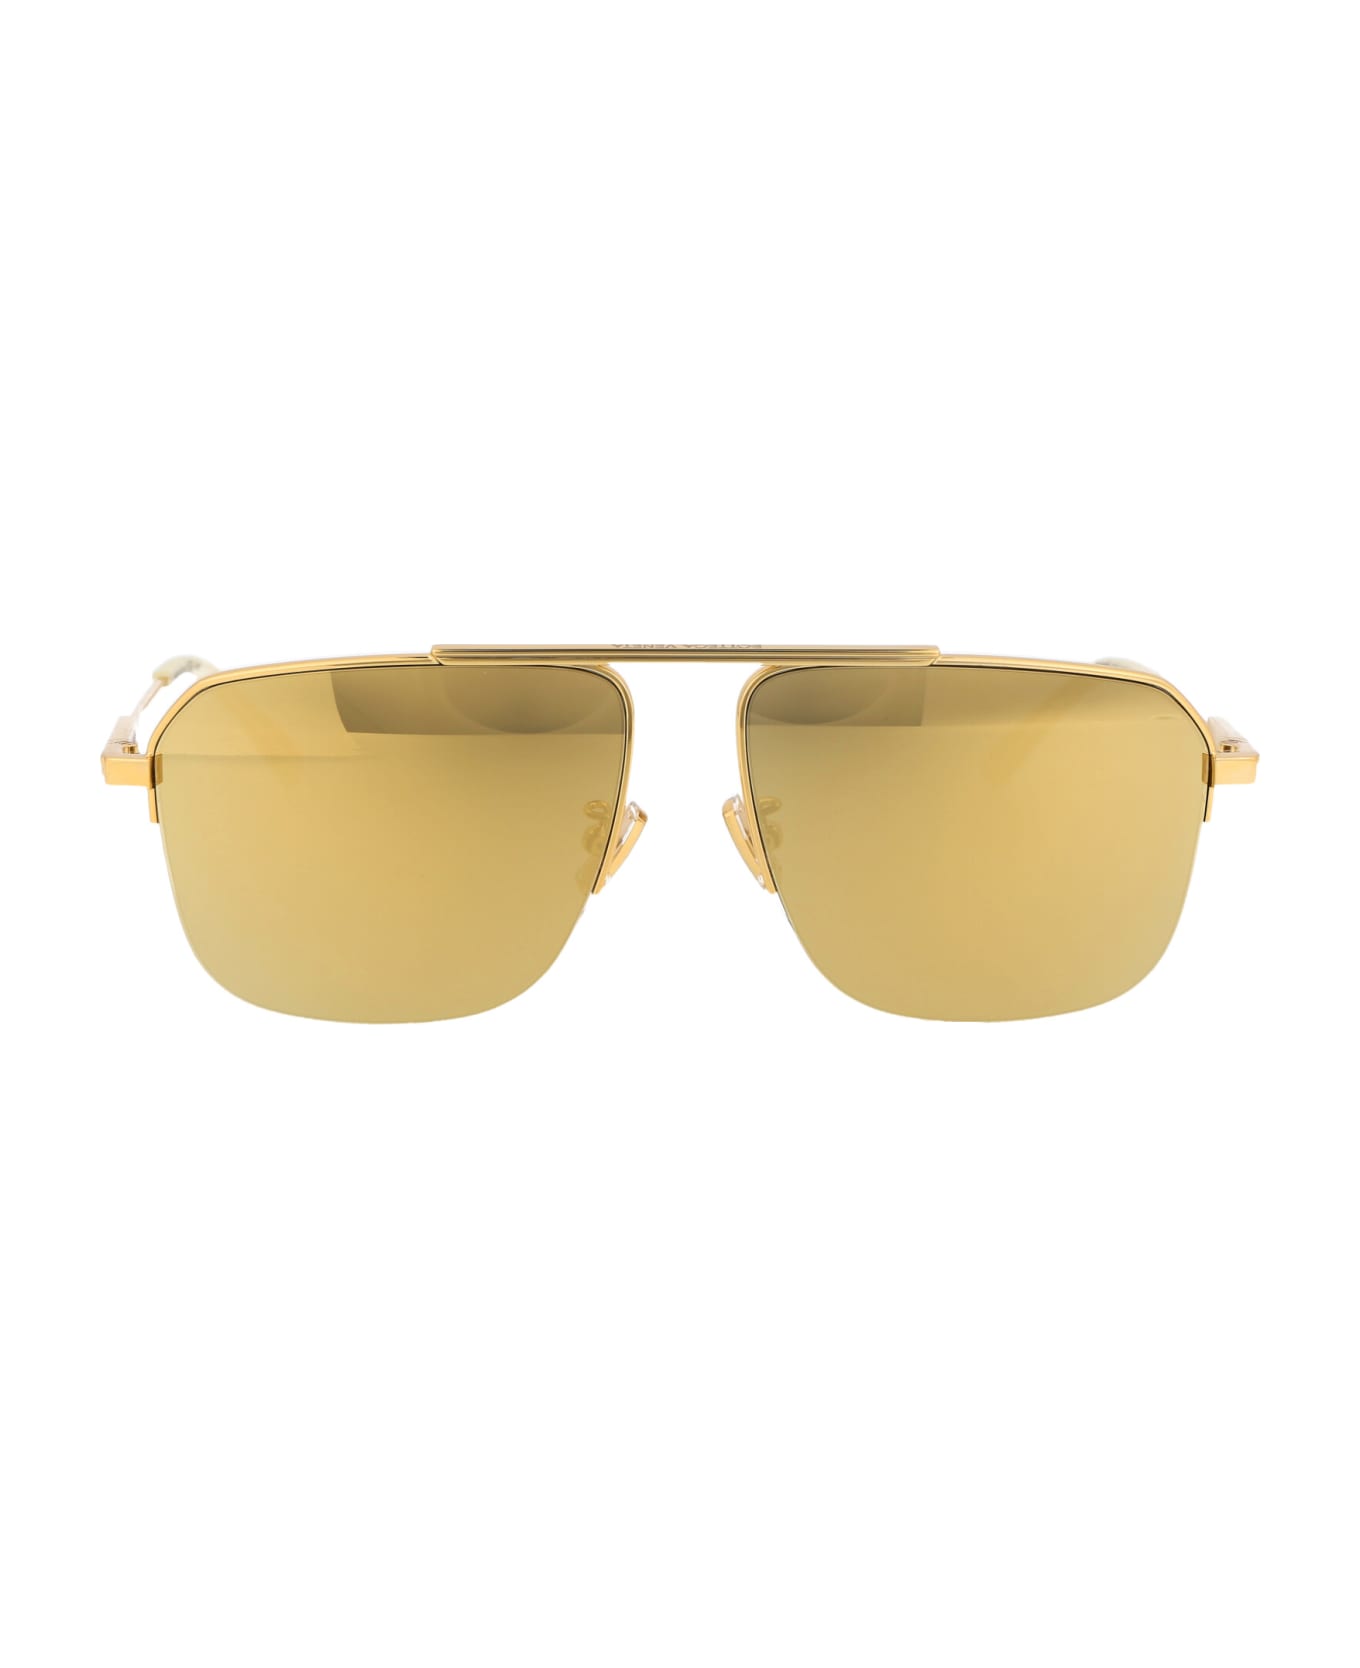 Bottega Veneta Eyewear Bv1149s Sunglasses - 005 GOLD GOLD GOLD サングラス